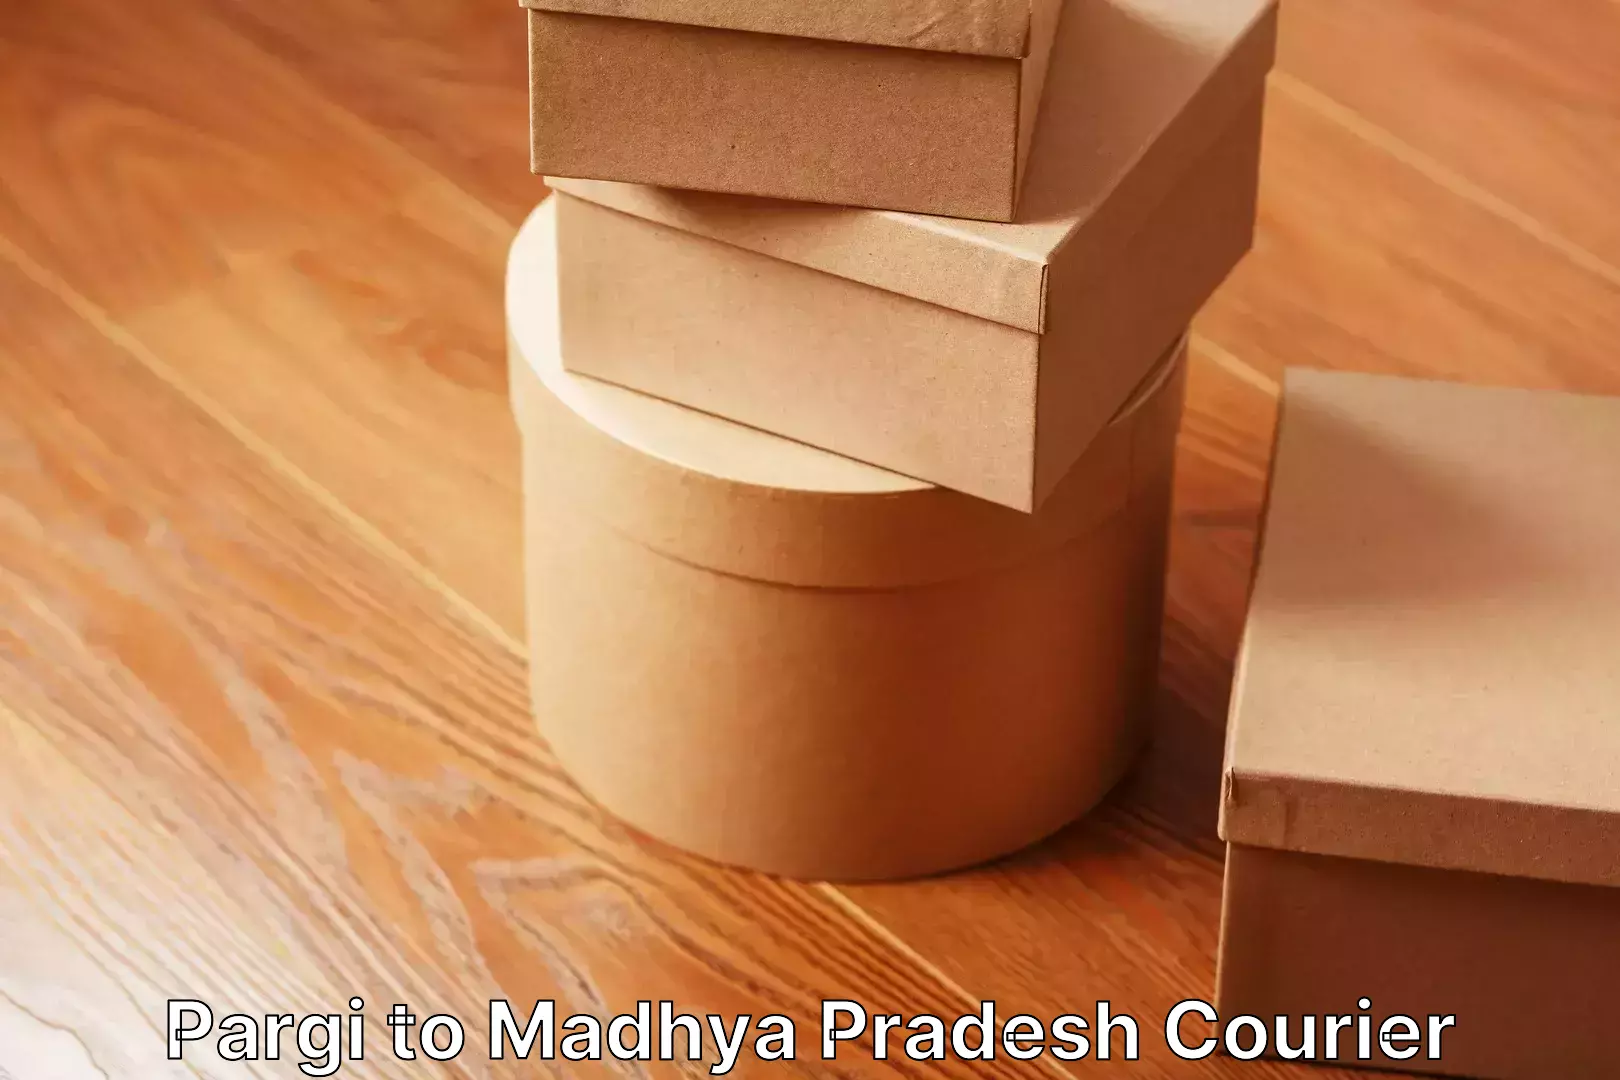 Furniture moving specialists Pargi to Madhya Pradesh